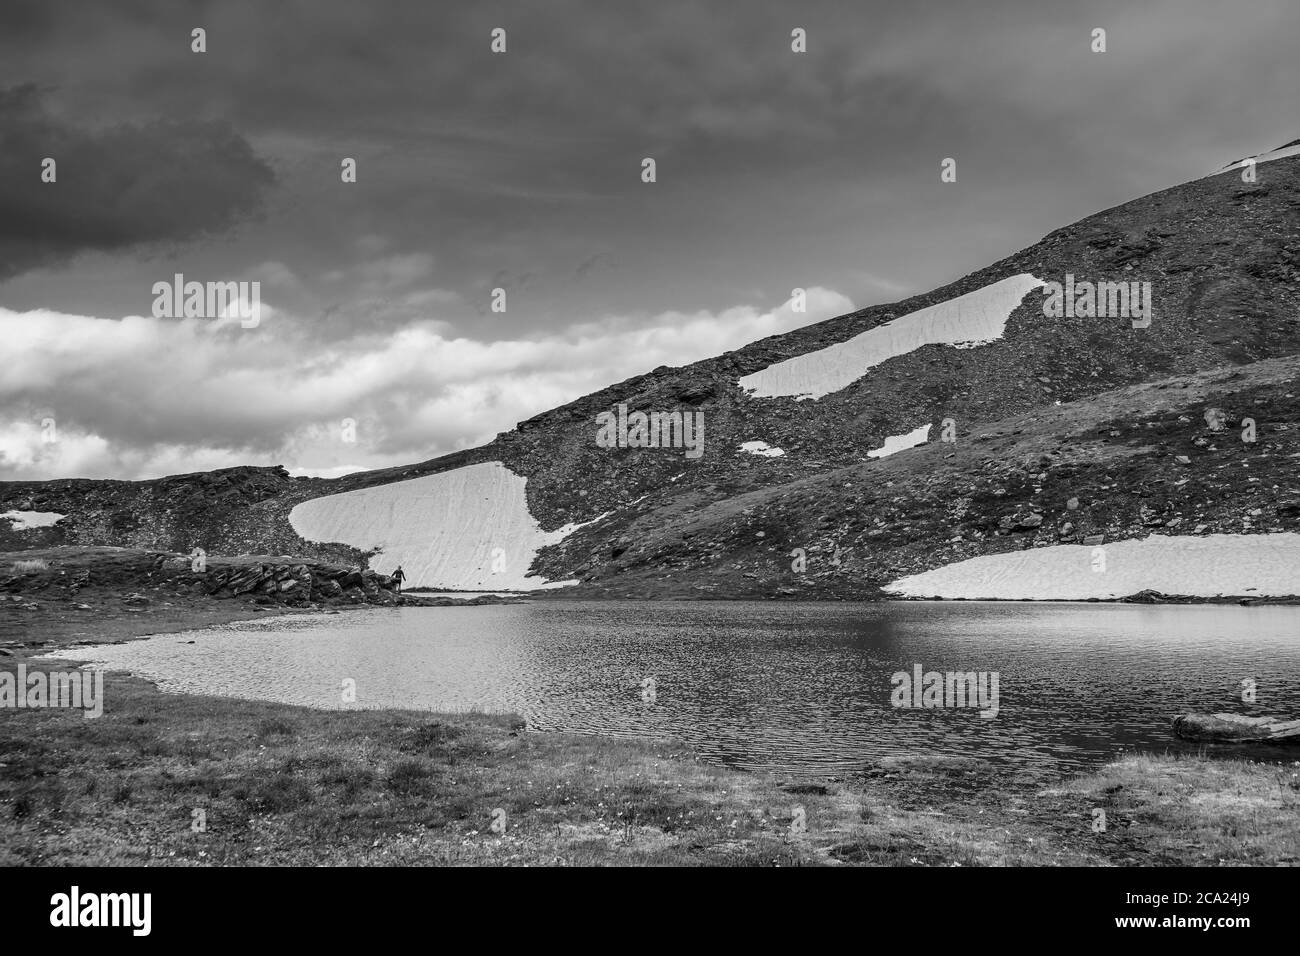 Le randonneur explore la rive des petits lacs alpins Banque D'Images